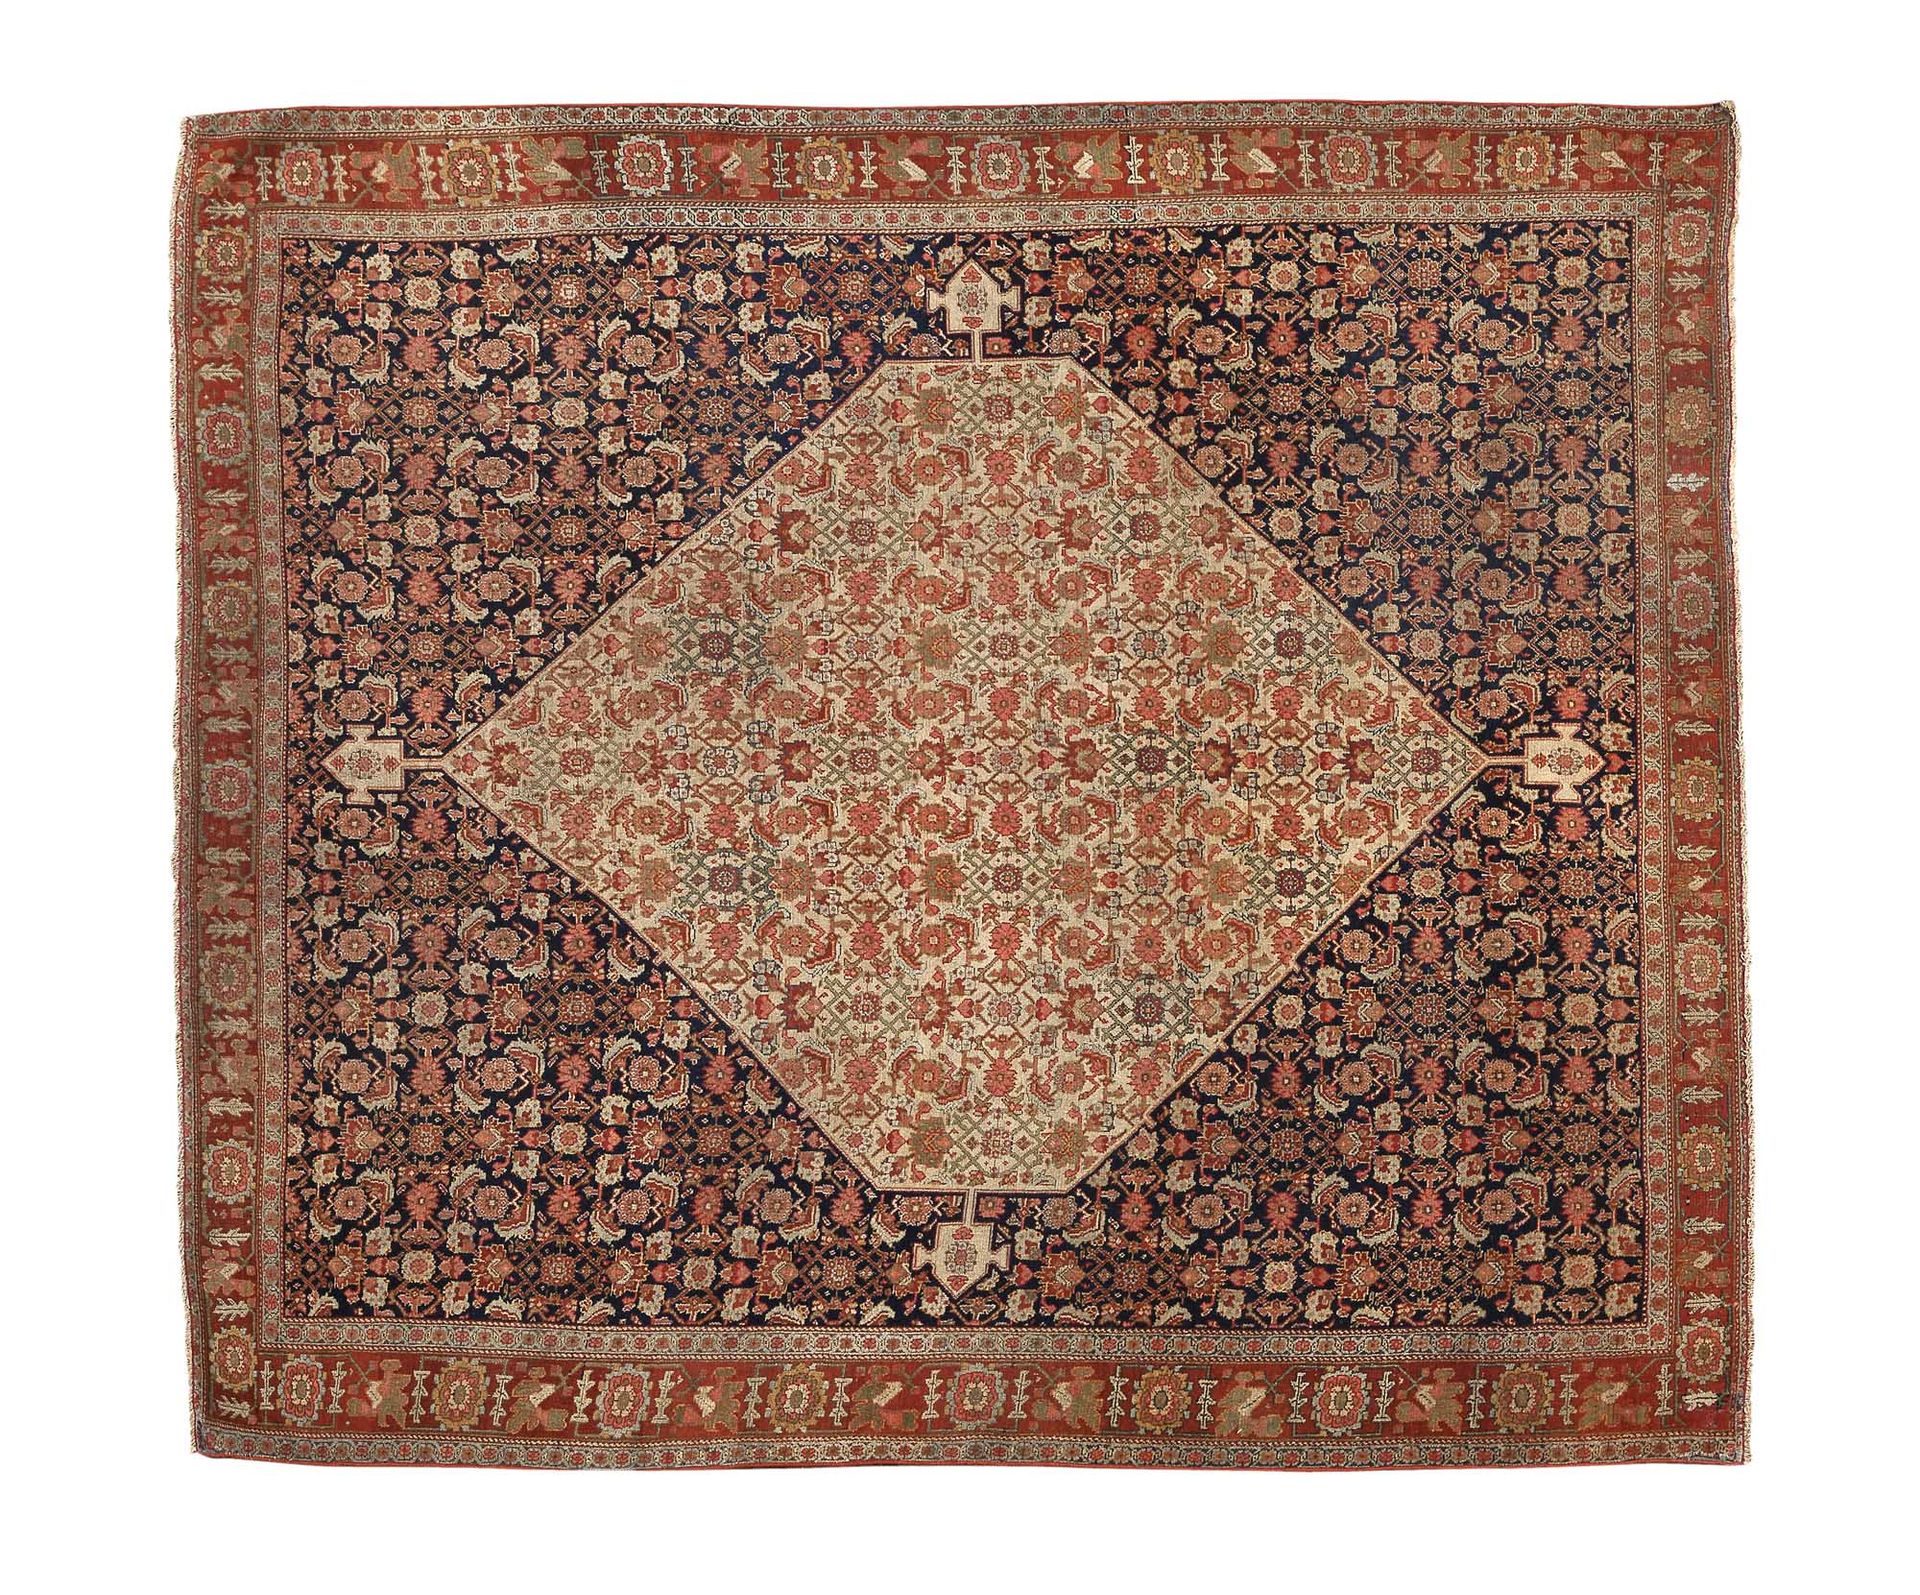 Null Fin tapis SENNEH (Perse), fin du 19e siècle

Dimensions : 180 x 155cm

Cara&hellip;